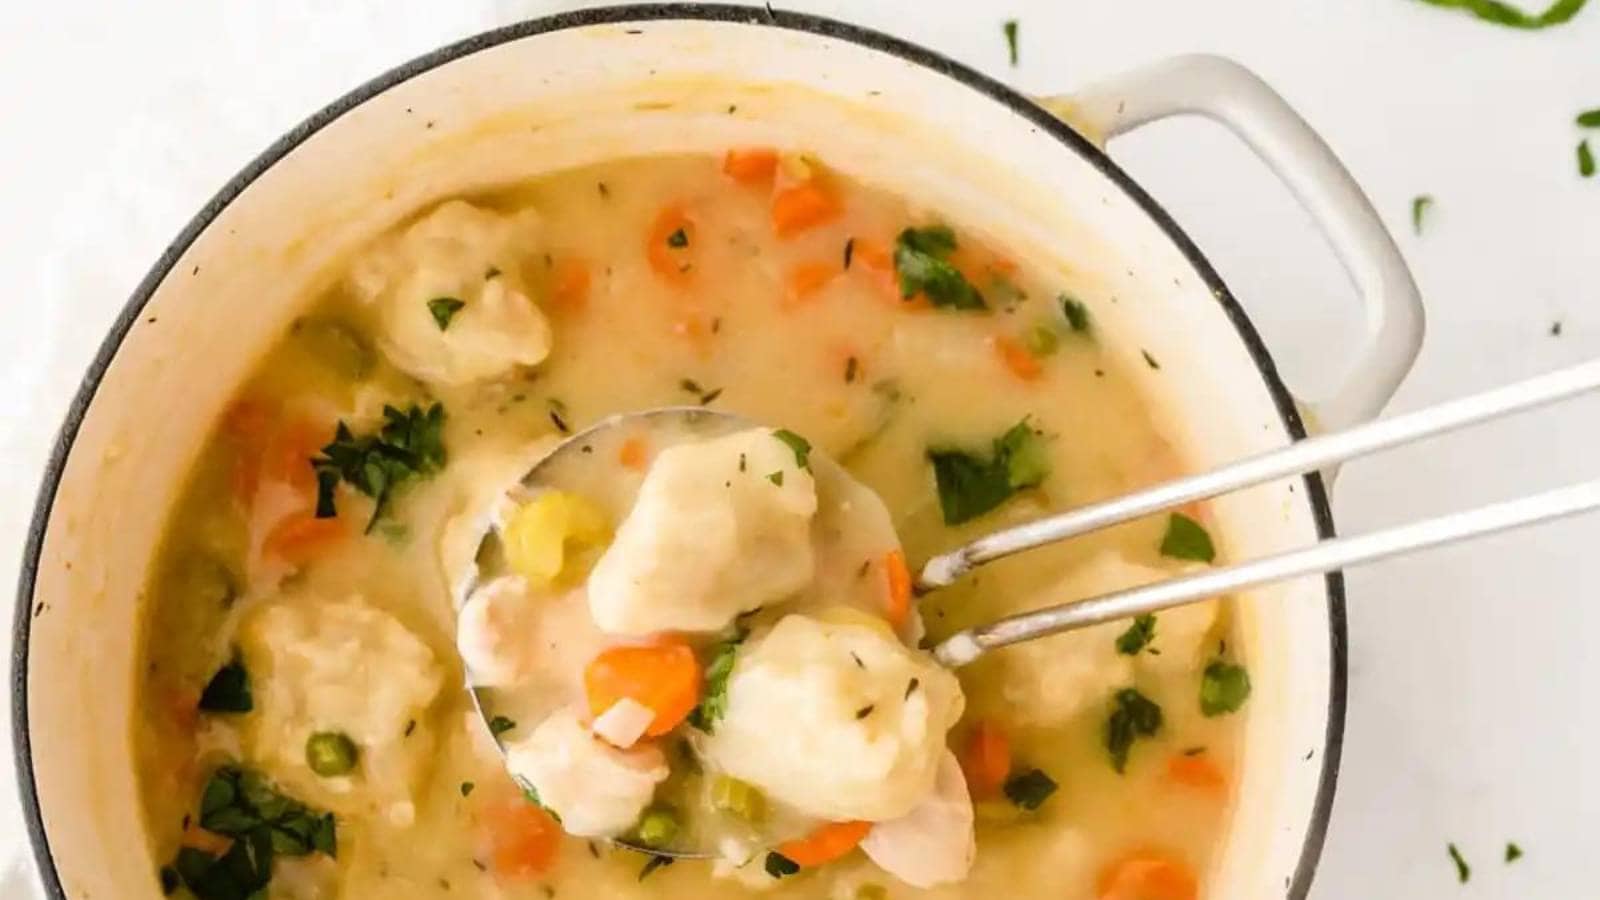 Chicken and Dumplings Soup Recipe.
